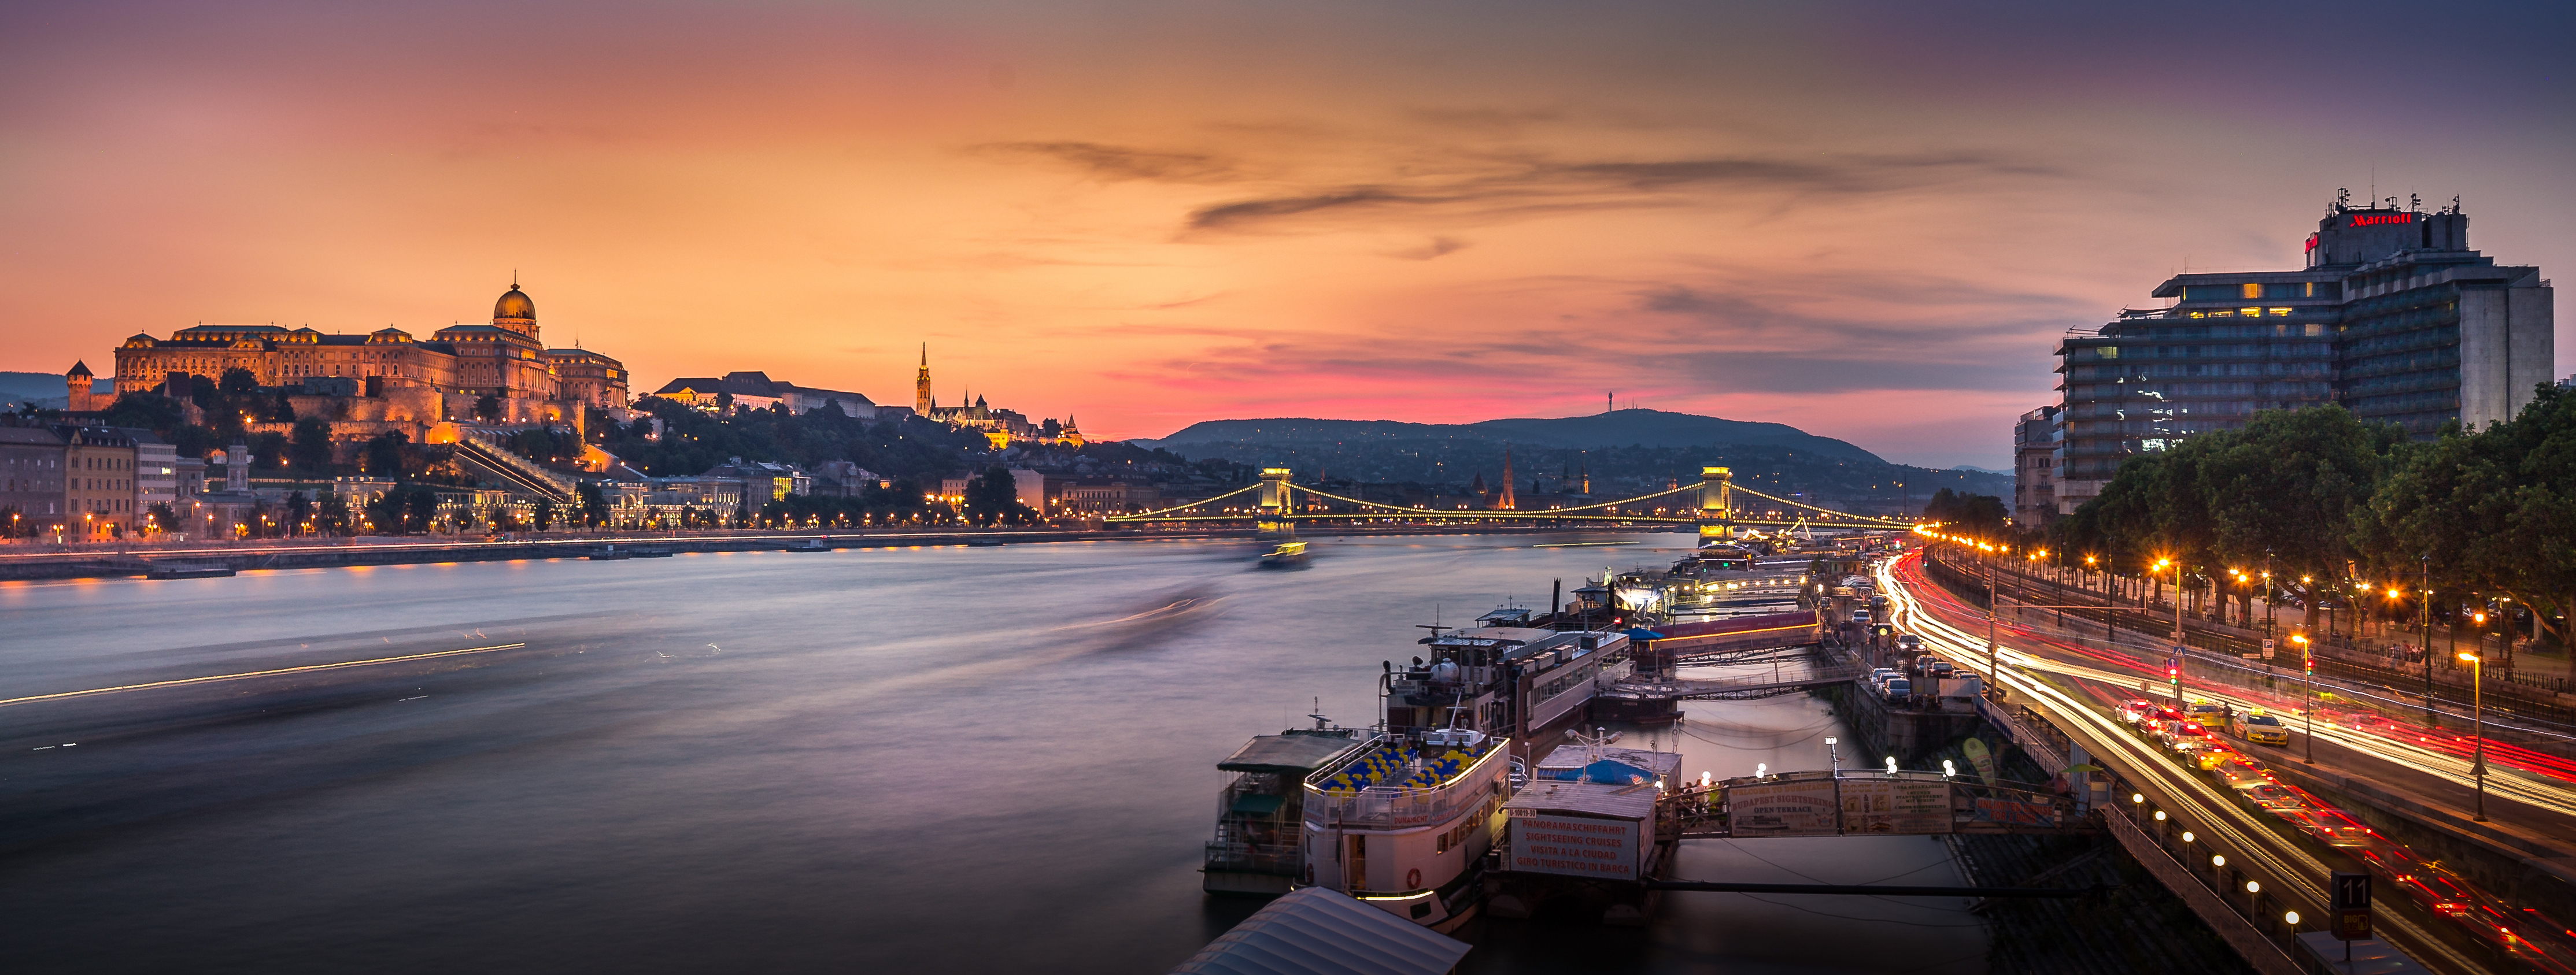 Photo free Budapest, Budapest with Buda Castle, Chain Bridge